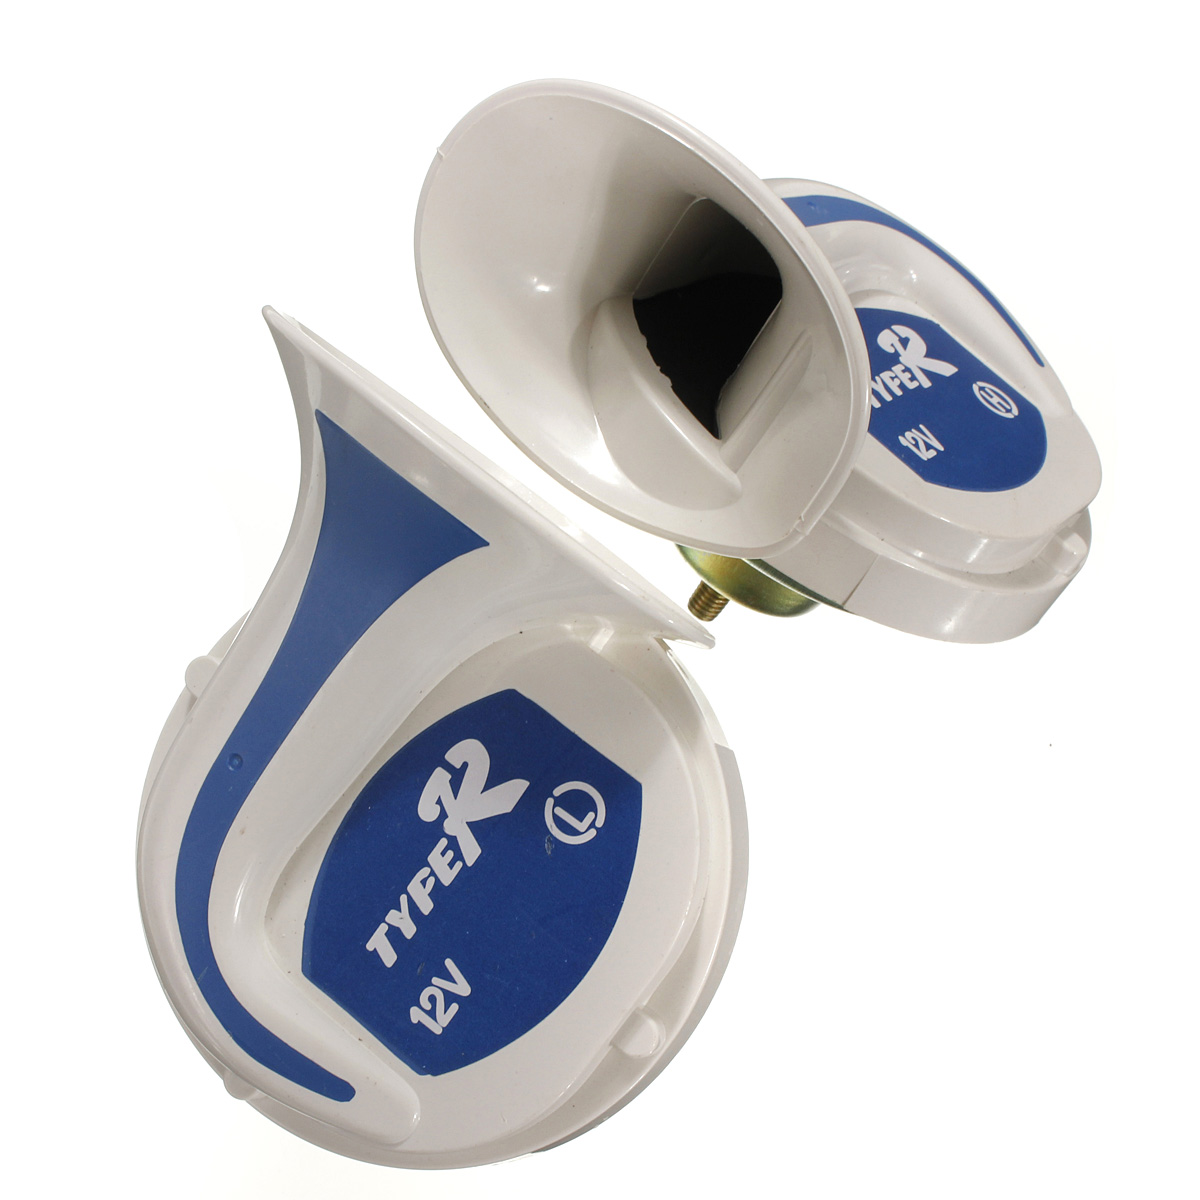 115 DB 12V Horn Auto Speaker Digital Electric Siren Loud Air Snail Horn Magic 18 Sounds Home Security Alarm System Loud